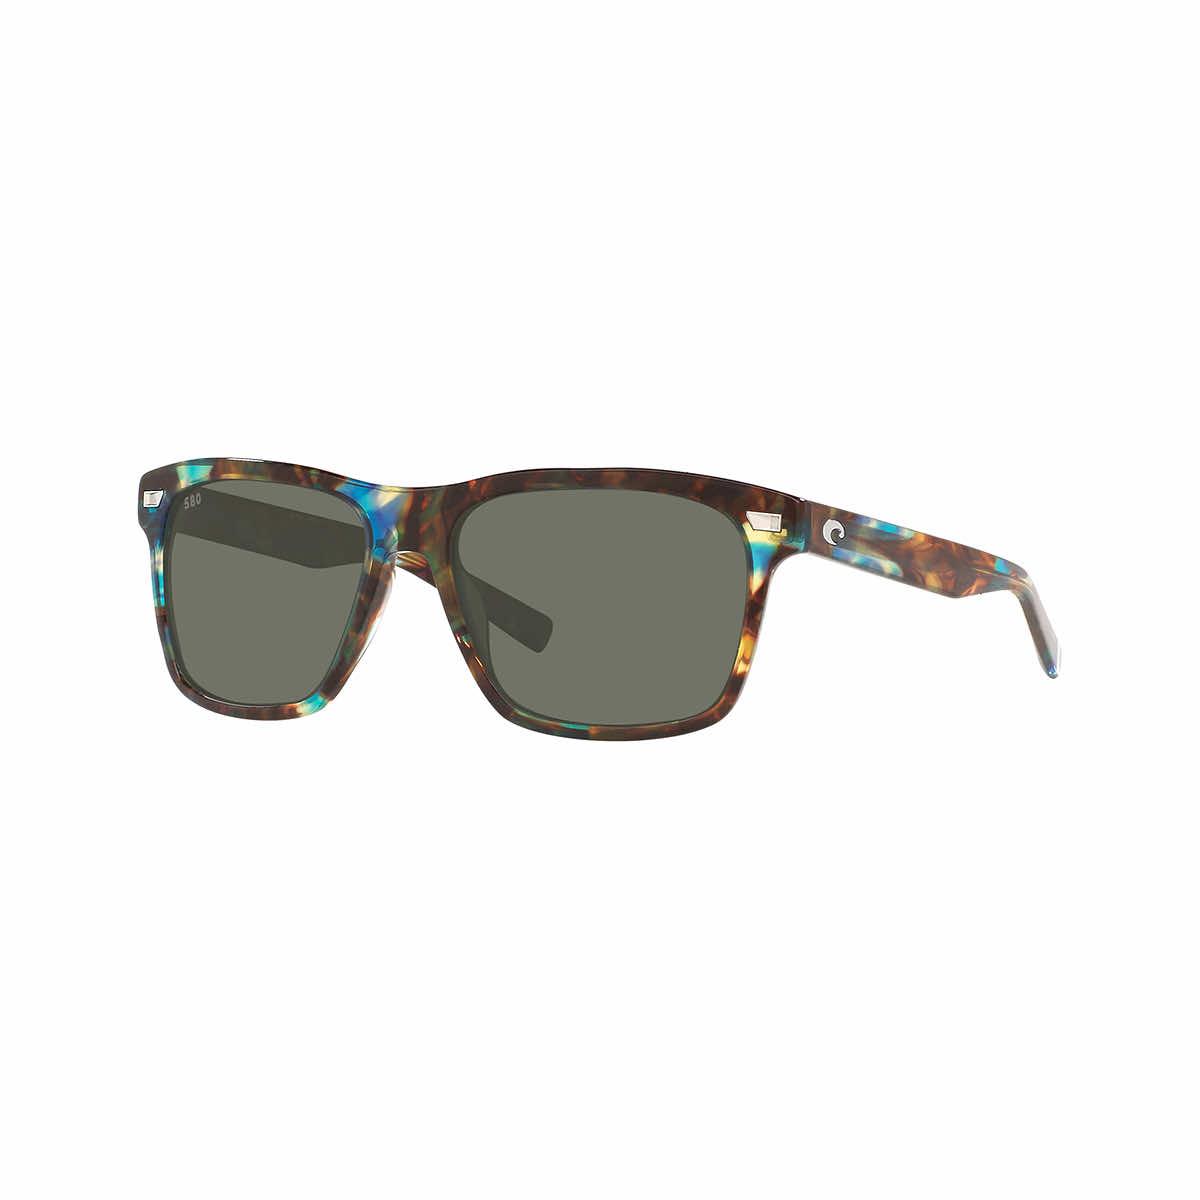  Aransas 580g Sunglasses - Polarized Glass